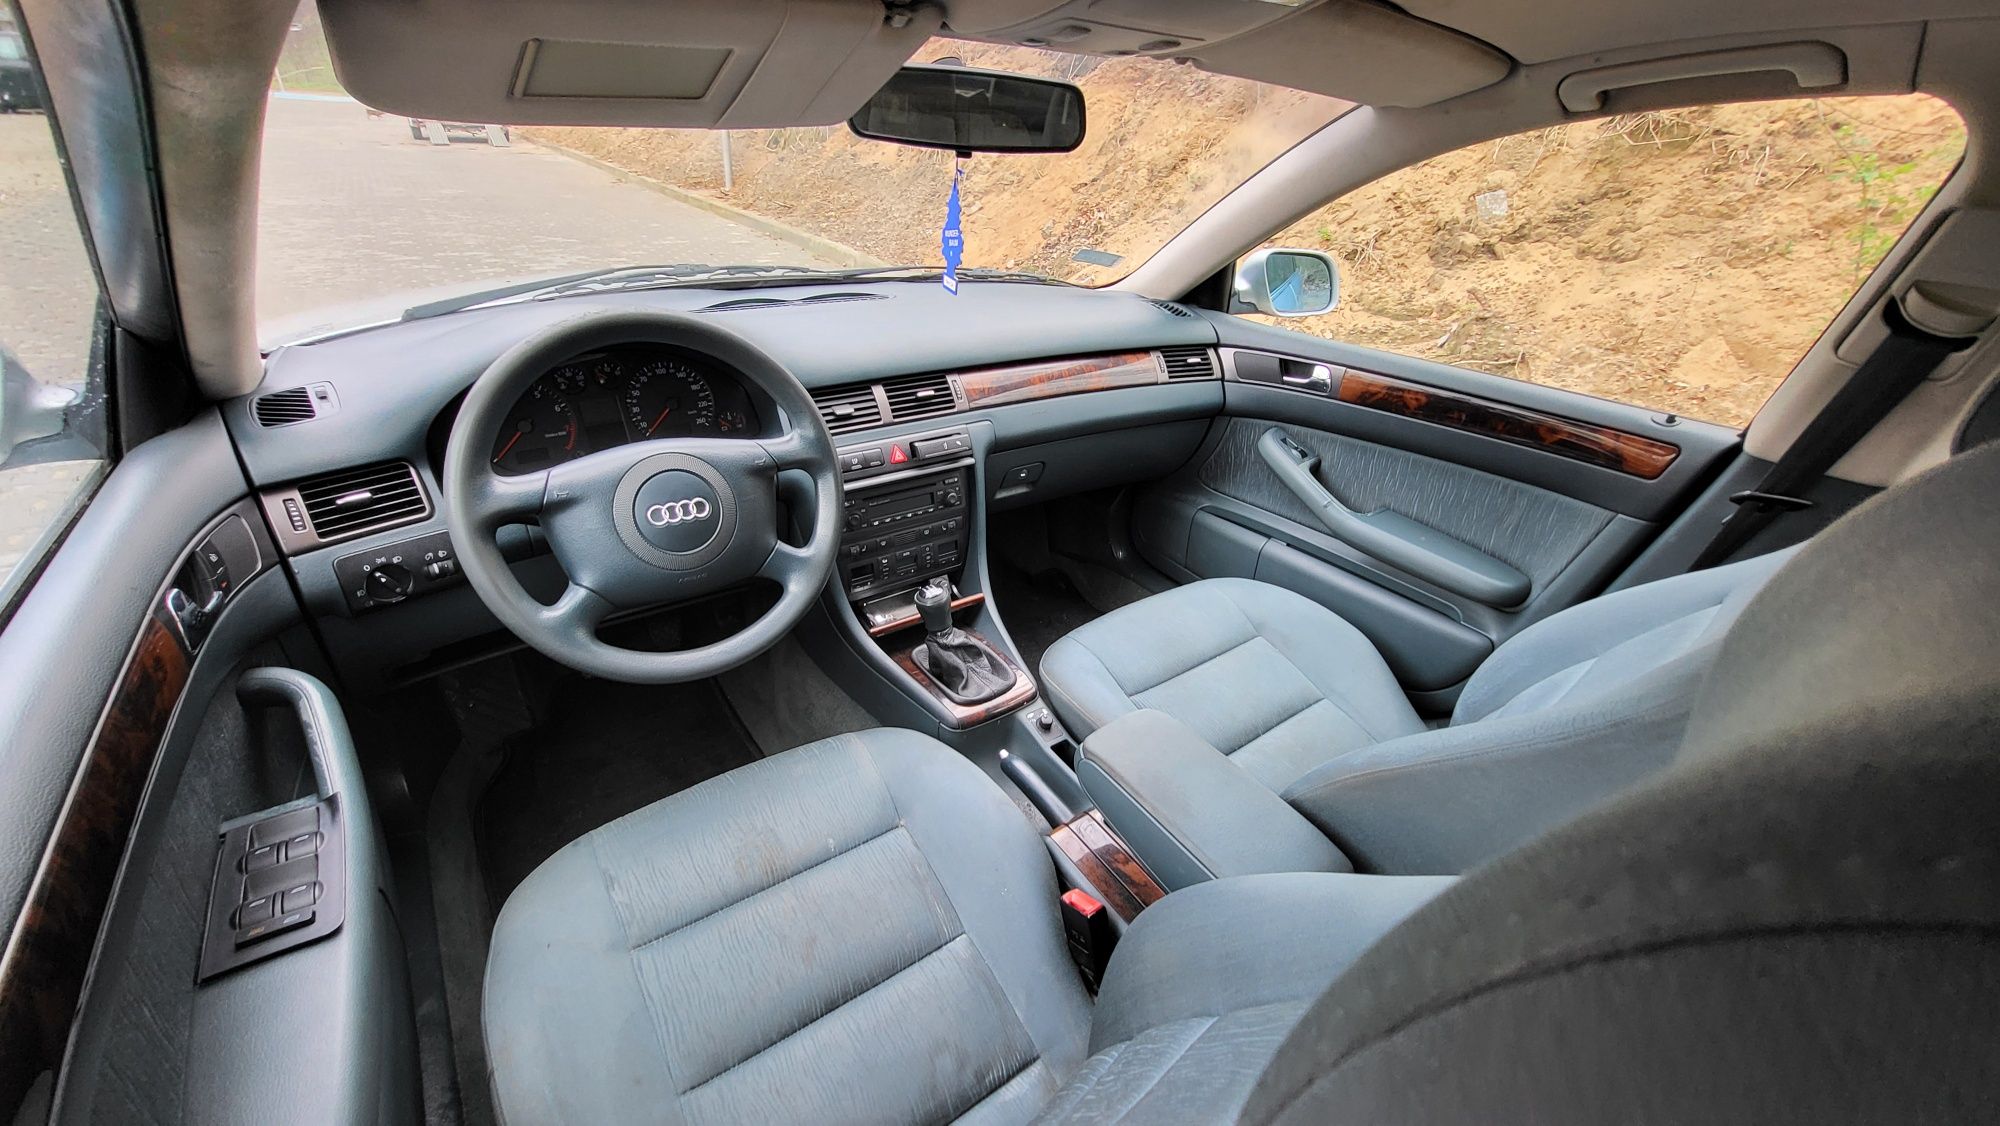 Audi A6 c5 / 2.4 V6 165km / kombi, sprawna